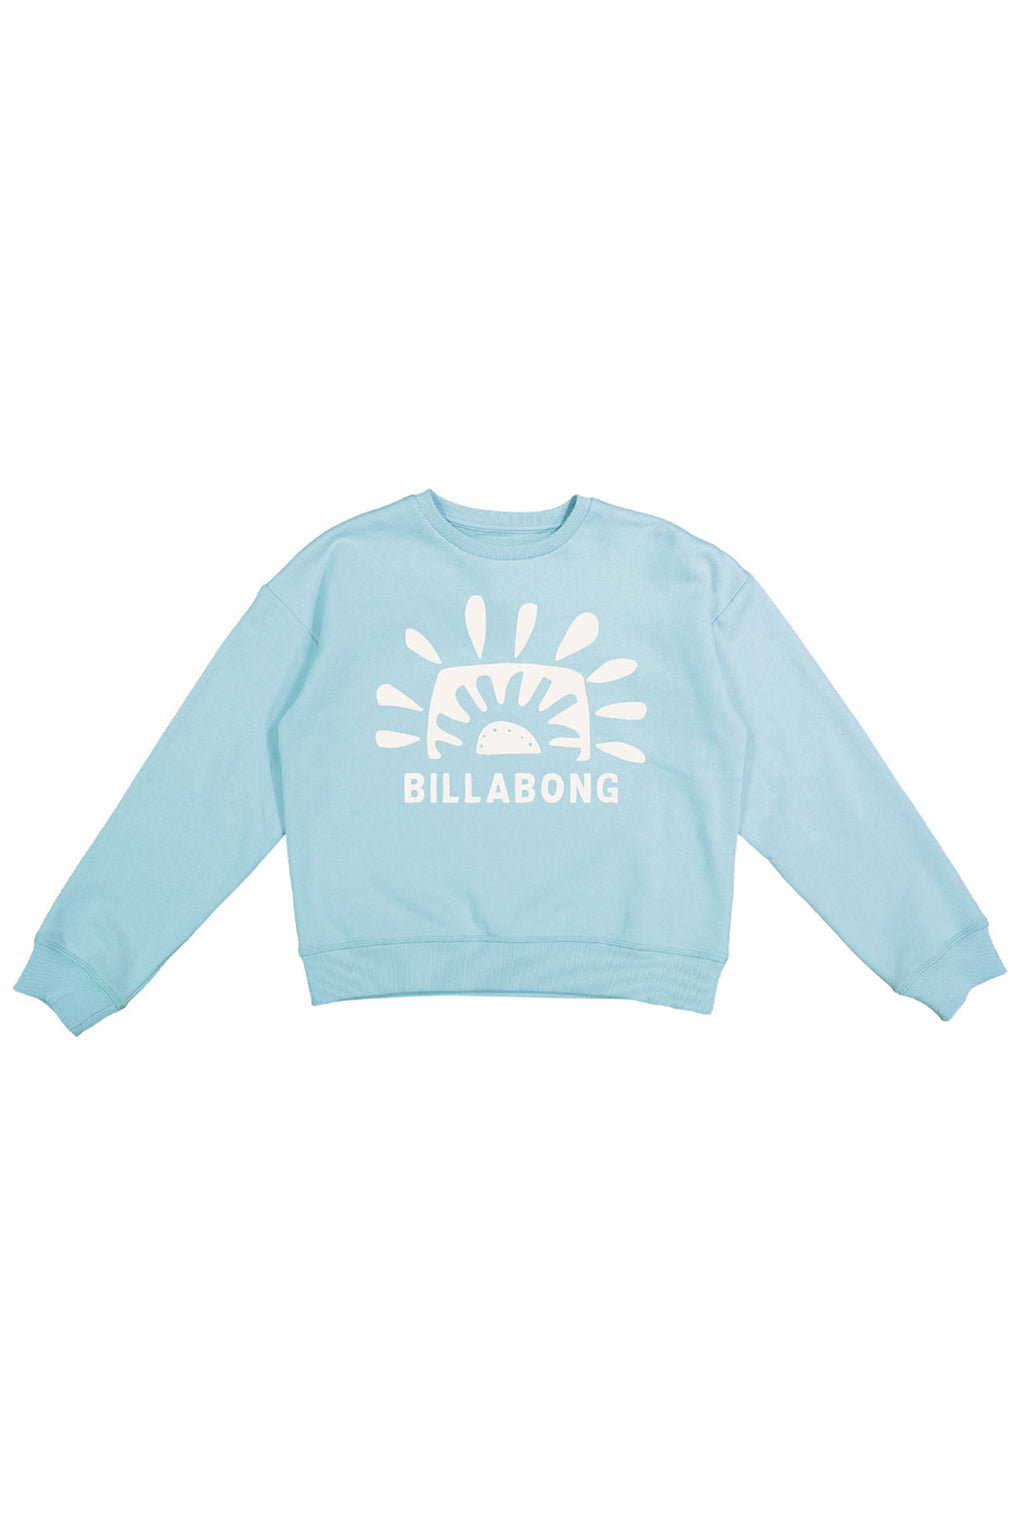 Billabong - Pre Girls Making Waves Pullover